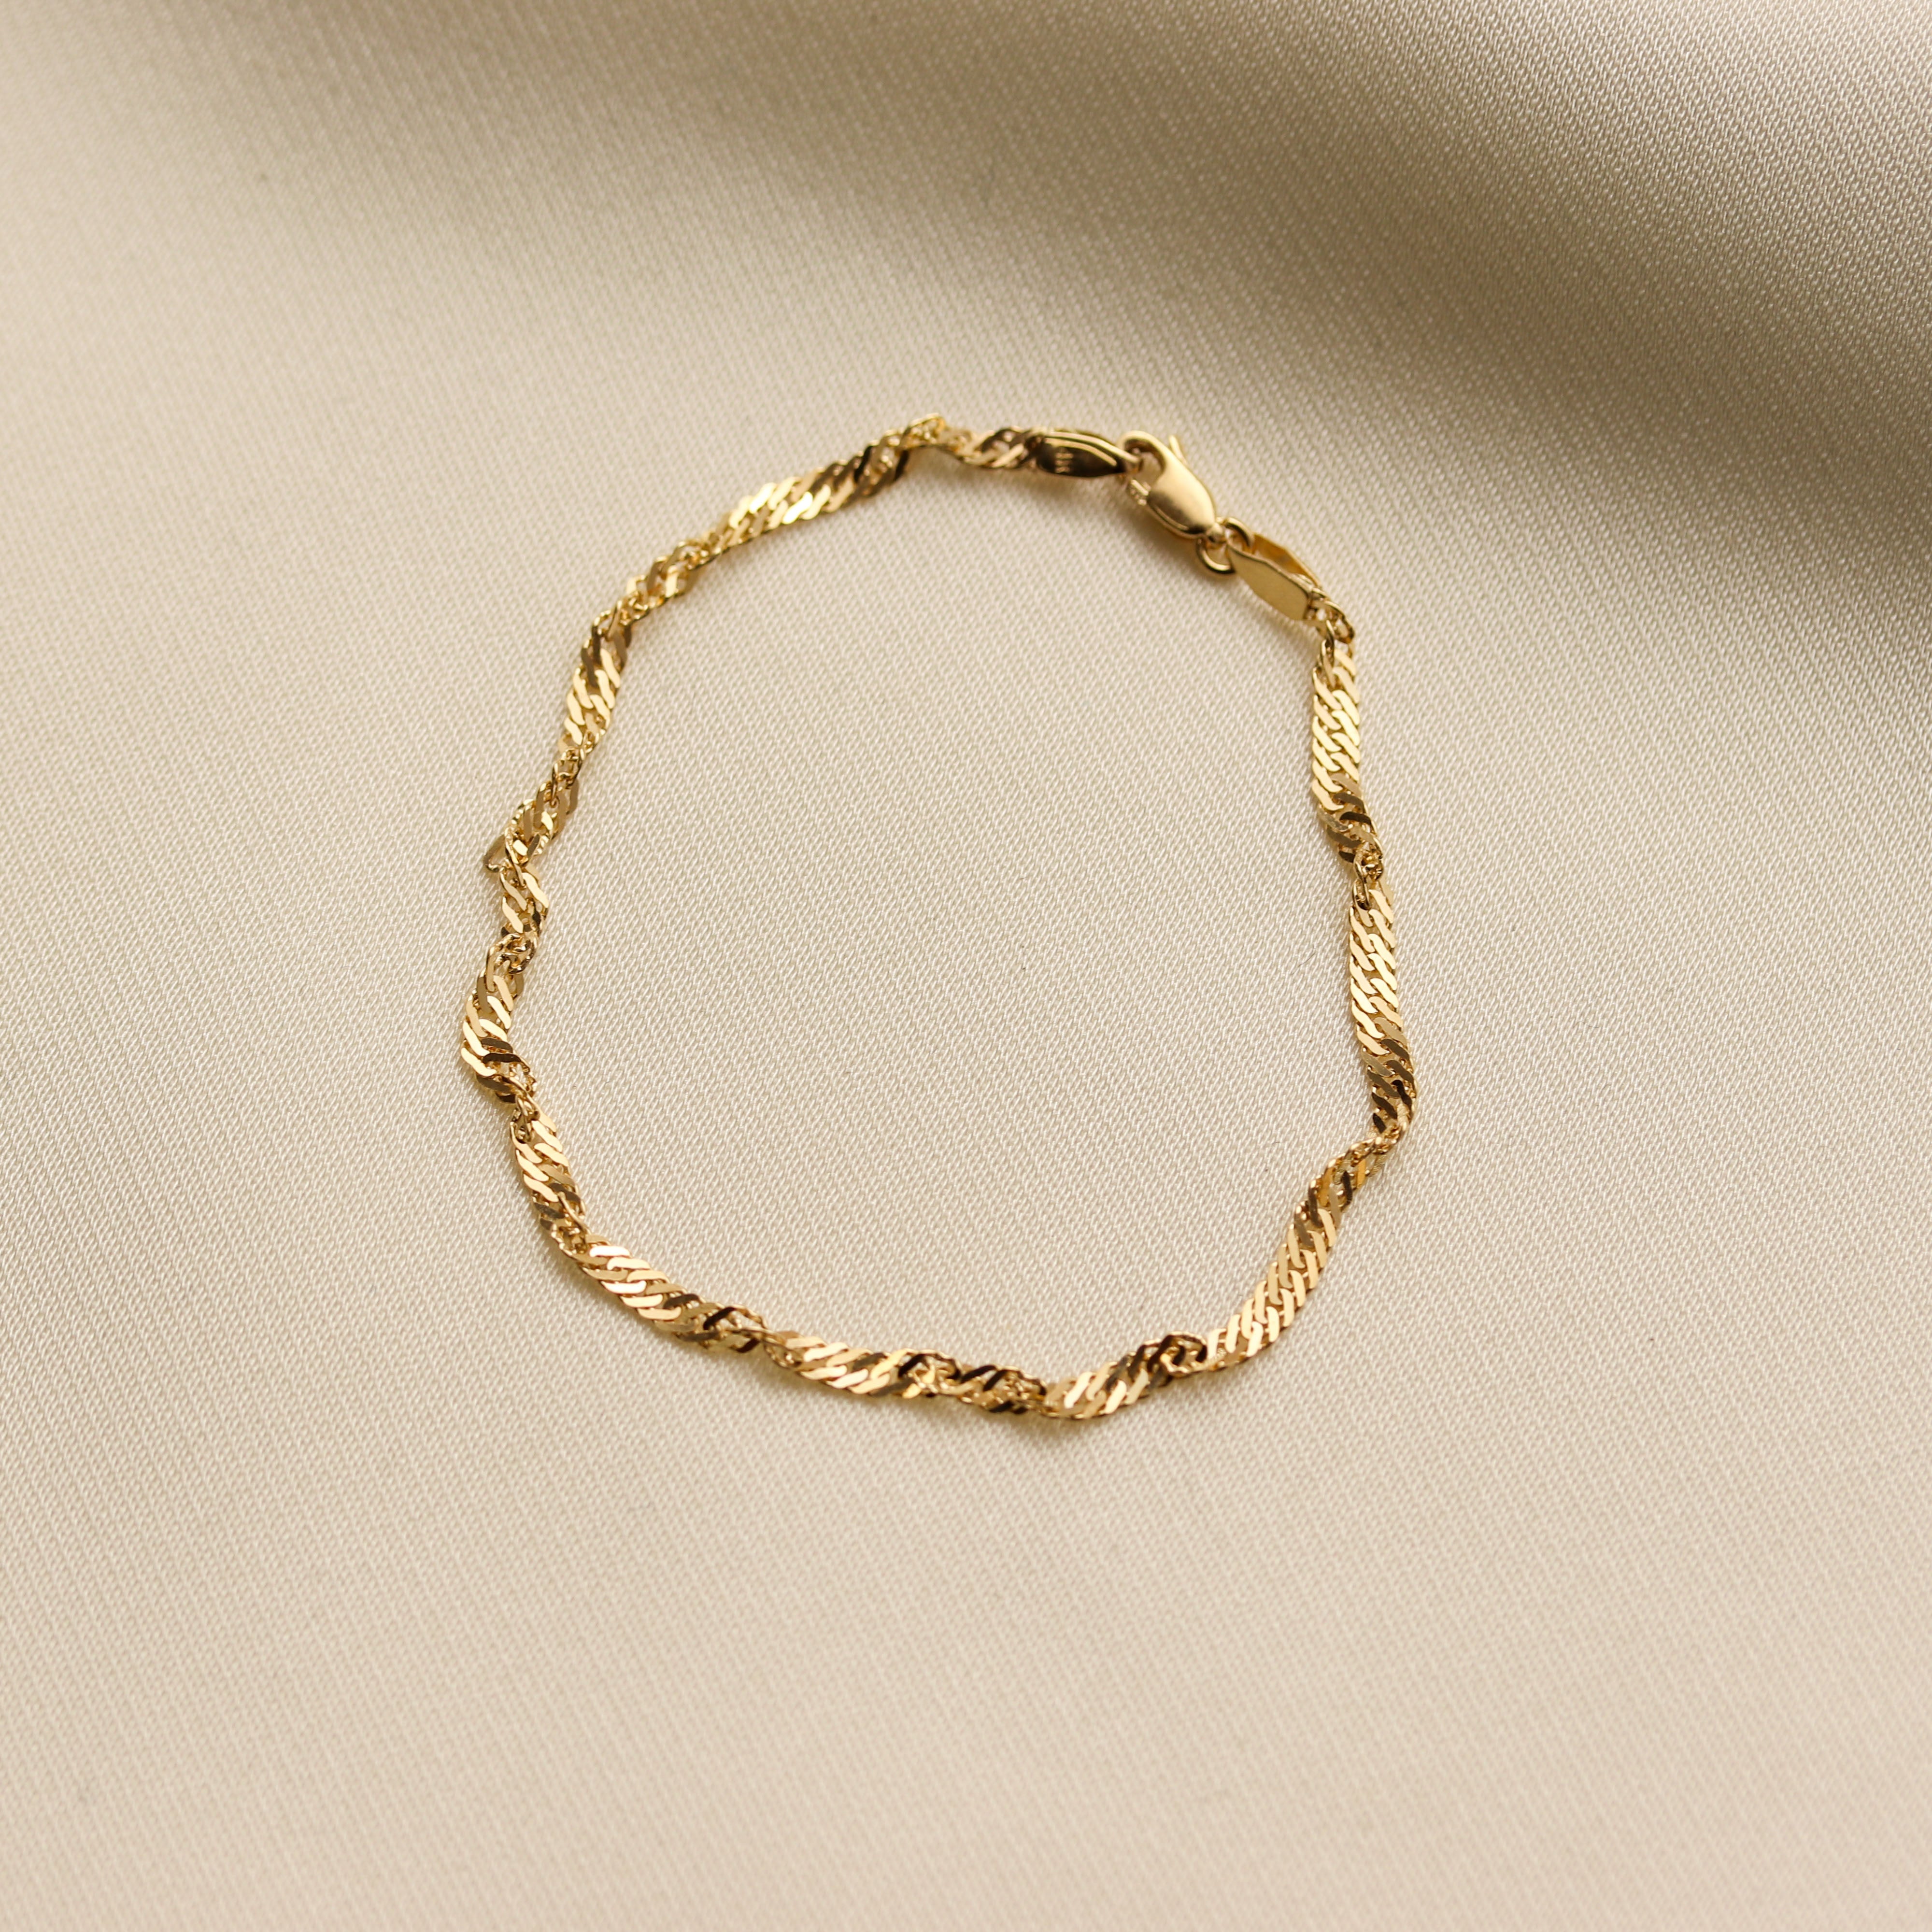 Umoja Link Bracelet in 18K Gold with Citrine and Diamond – KHIRY